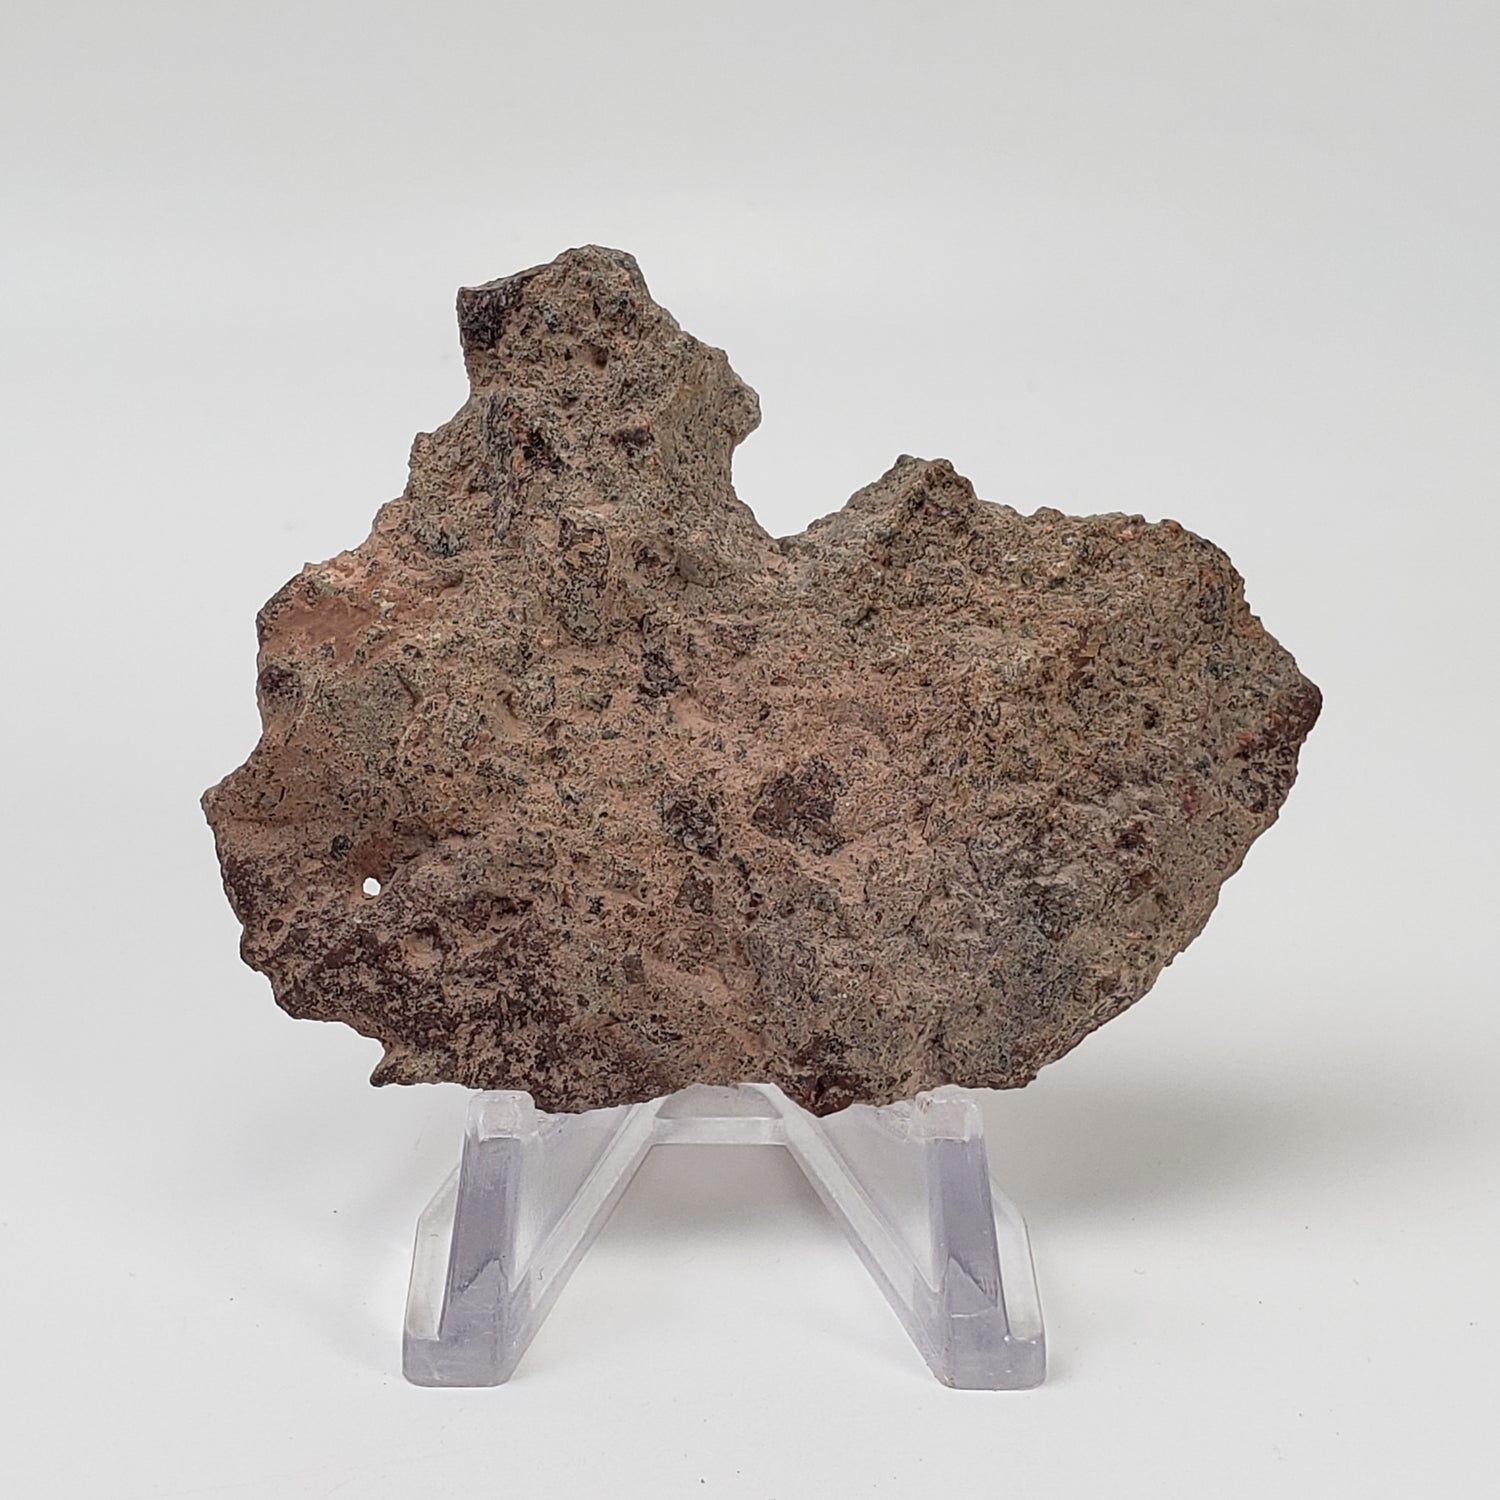 Impact Melt Rock | 25 grams | Dhala Impact Structure | 3rd Oldest Impact | India | Canagem.com